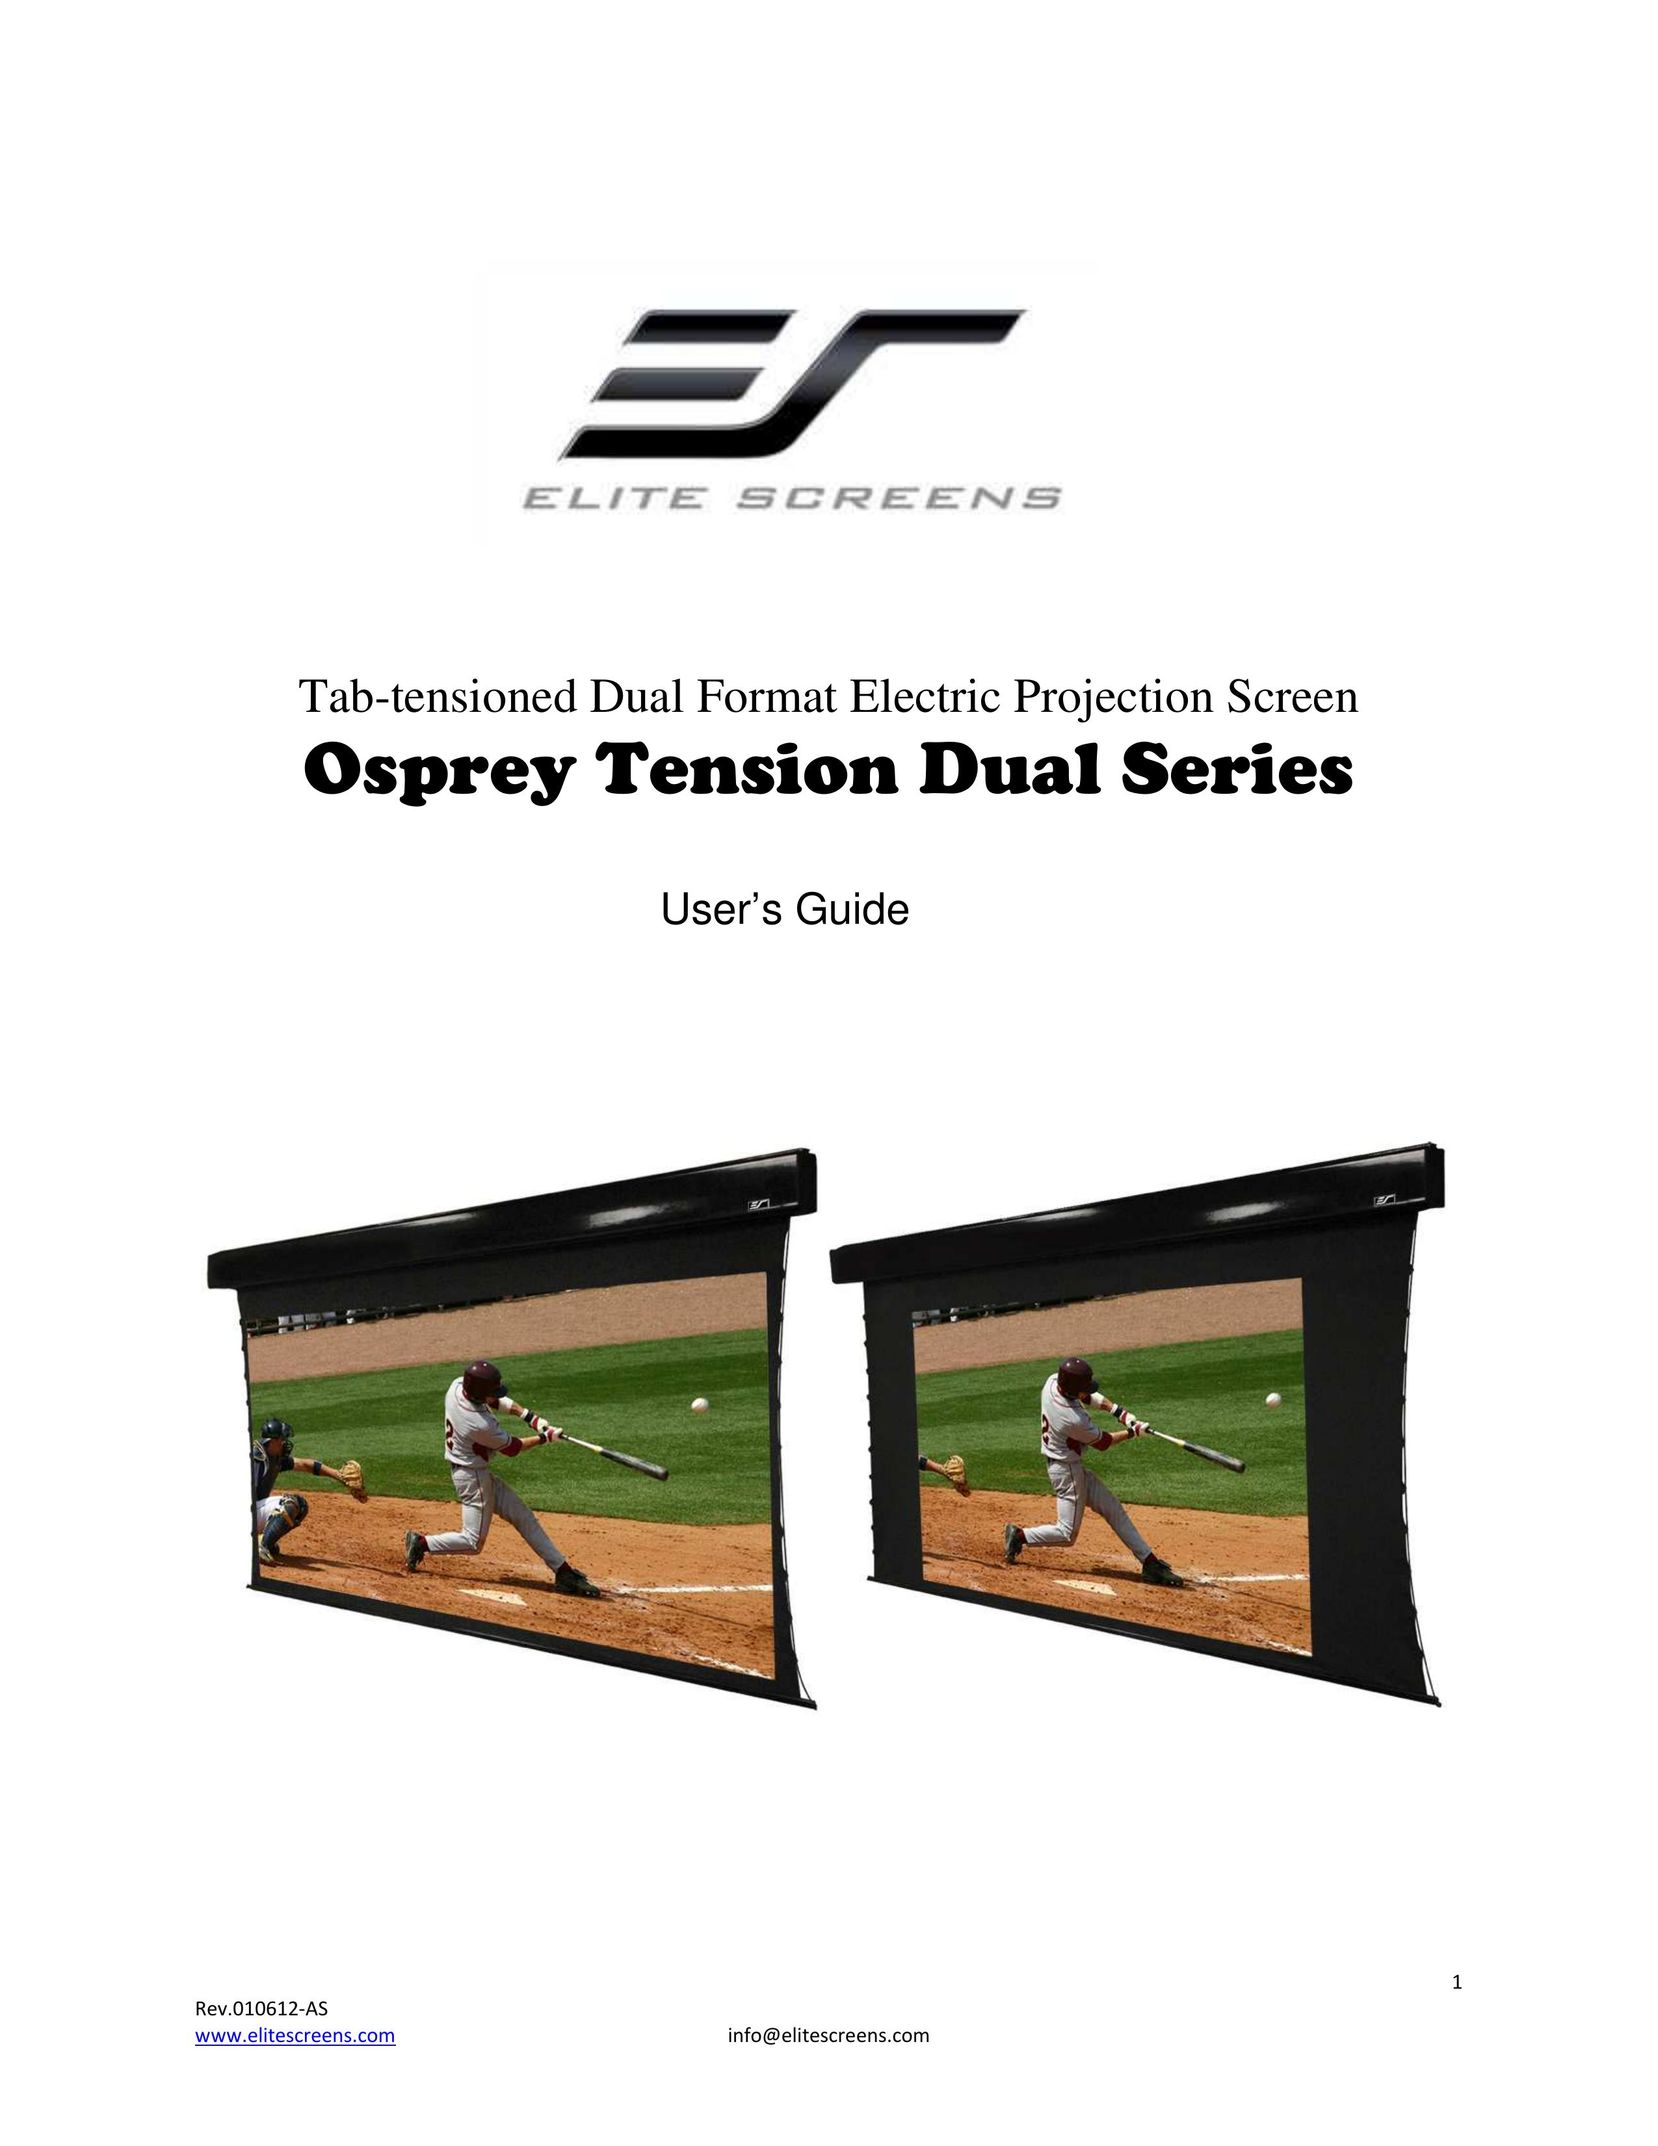 Elite Screens Osprey Tension Home Theater Screen User Manual